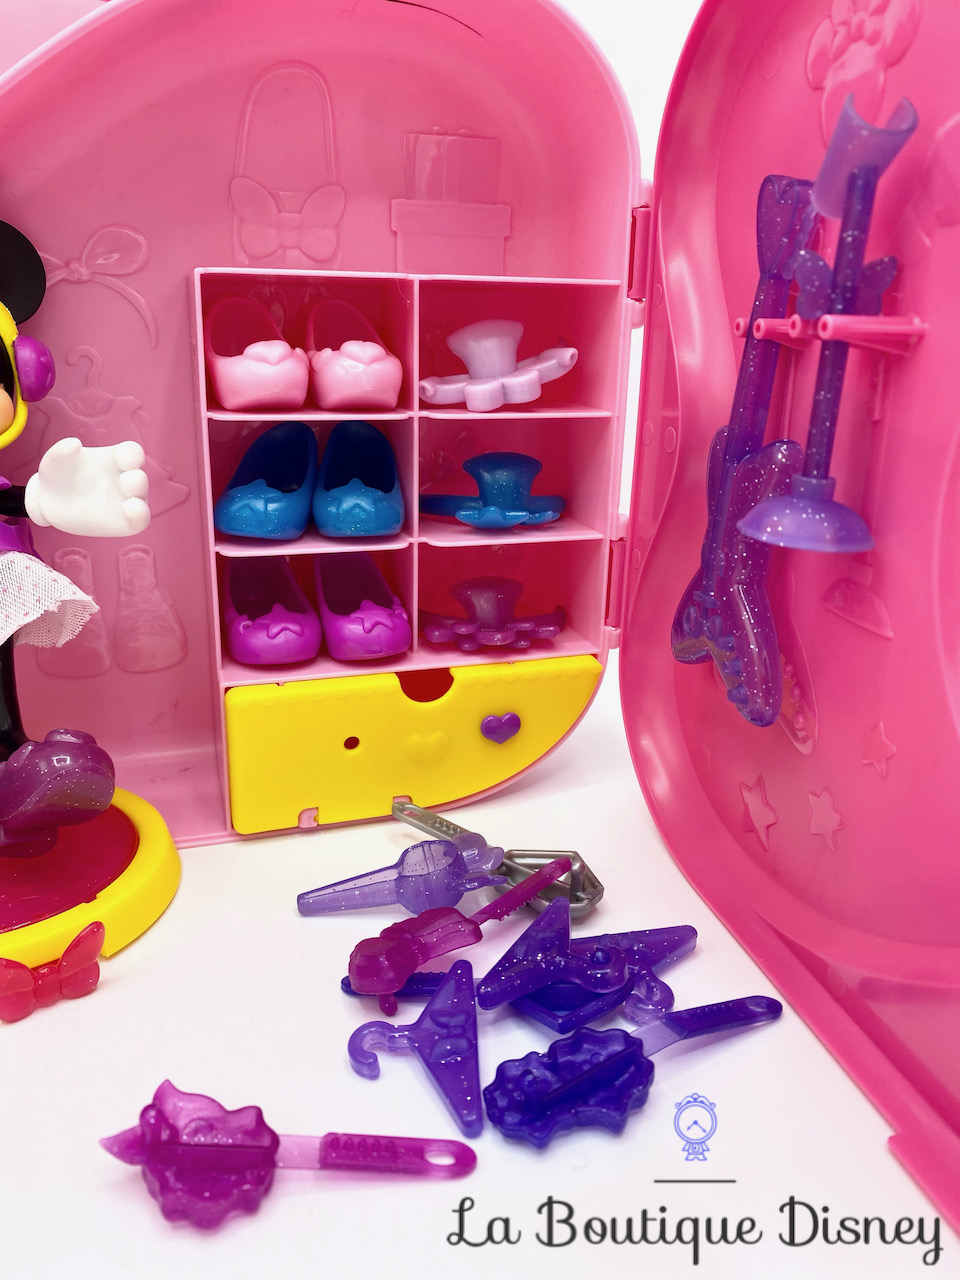 jouet-dressing-popstar-portable-minnie-mouse-disney-imc-toys-figurine-habiller-vetements-3